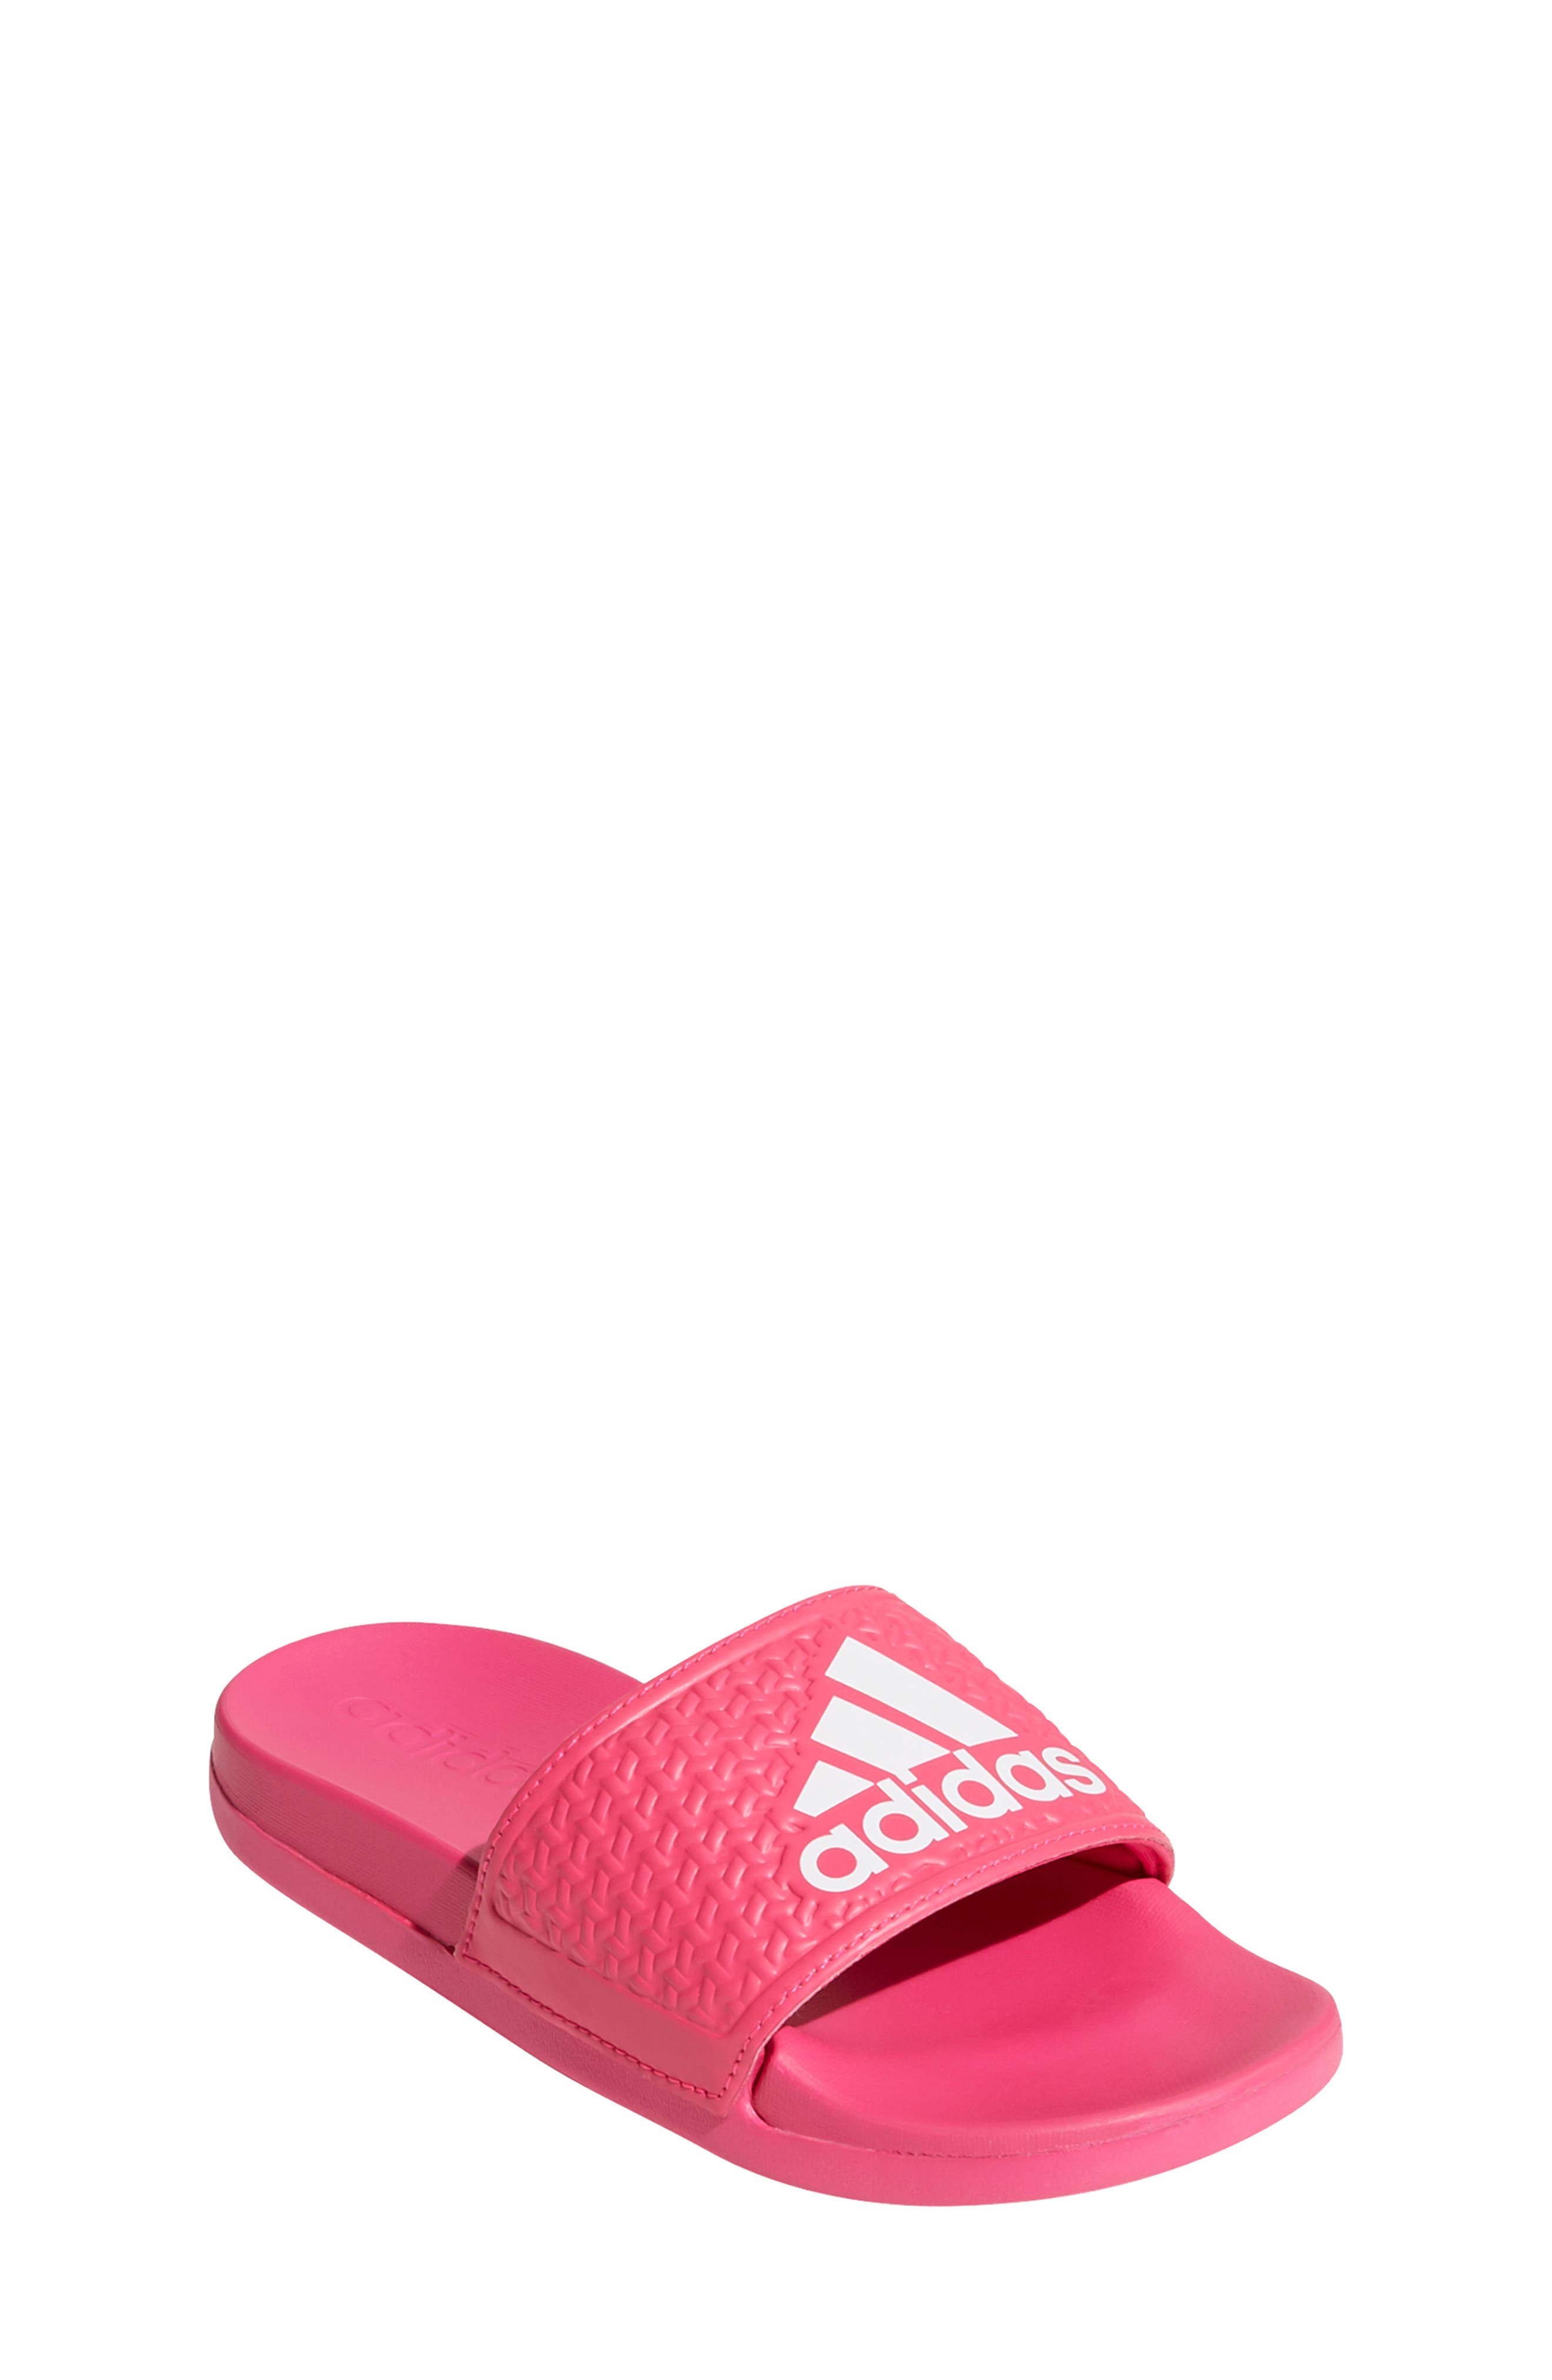 adidas flip flops for girls